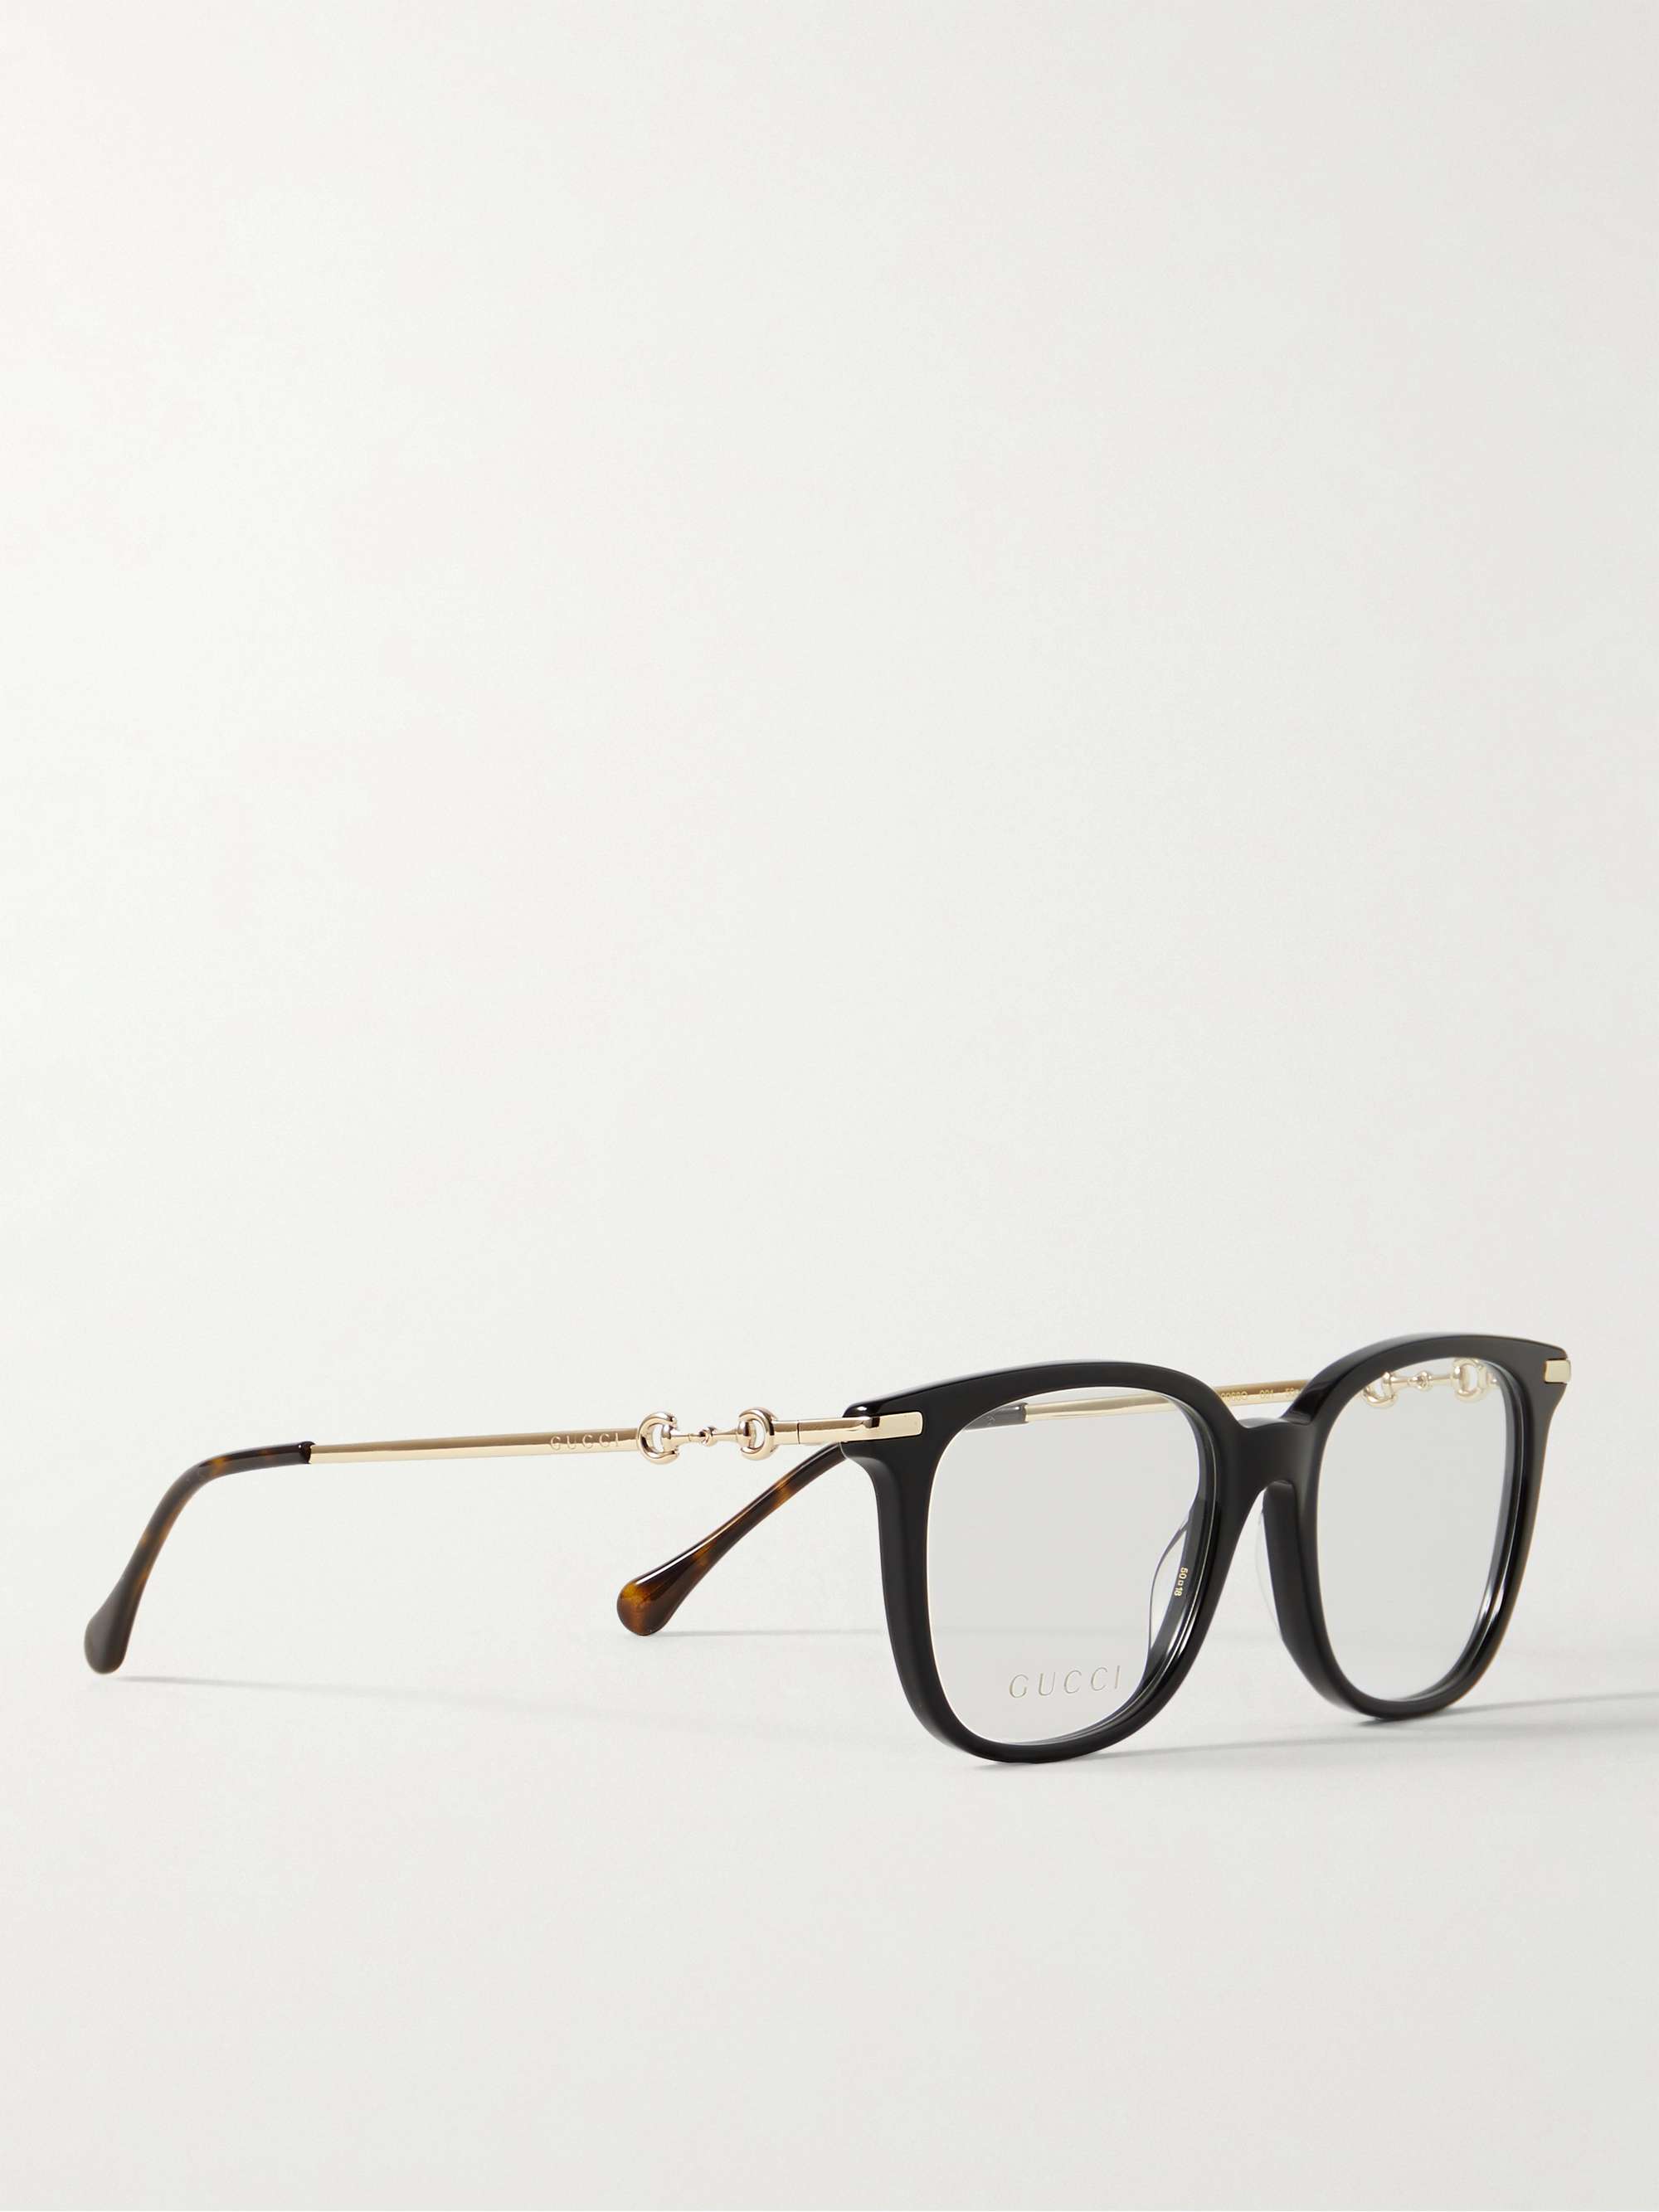 GUCCI EYEWEAR D-Frame Acetate and Gold-Tone Optical Glasses